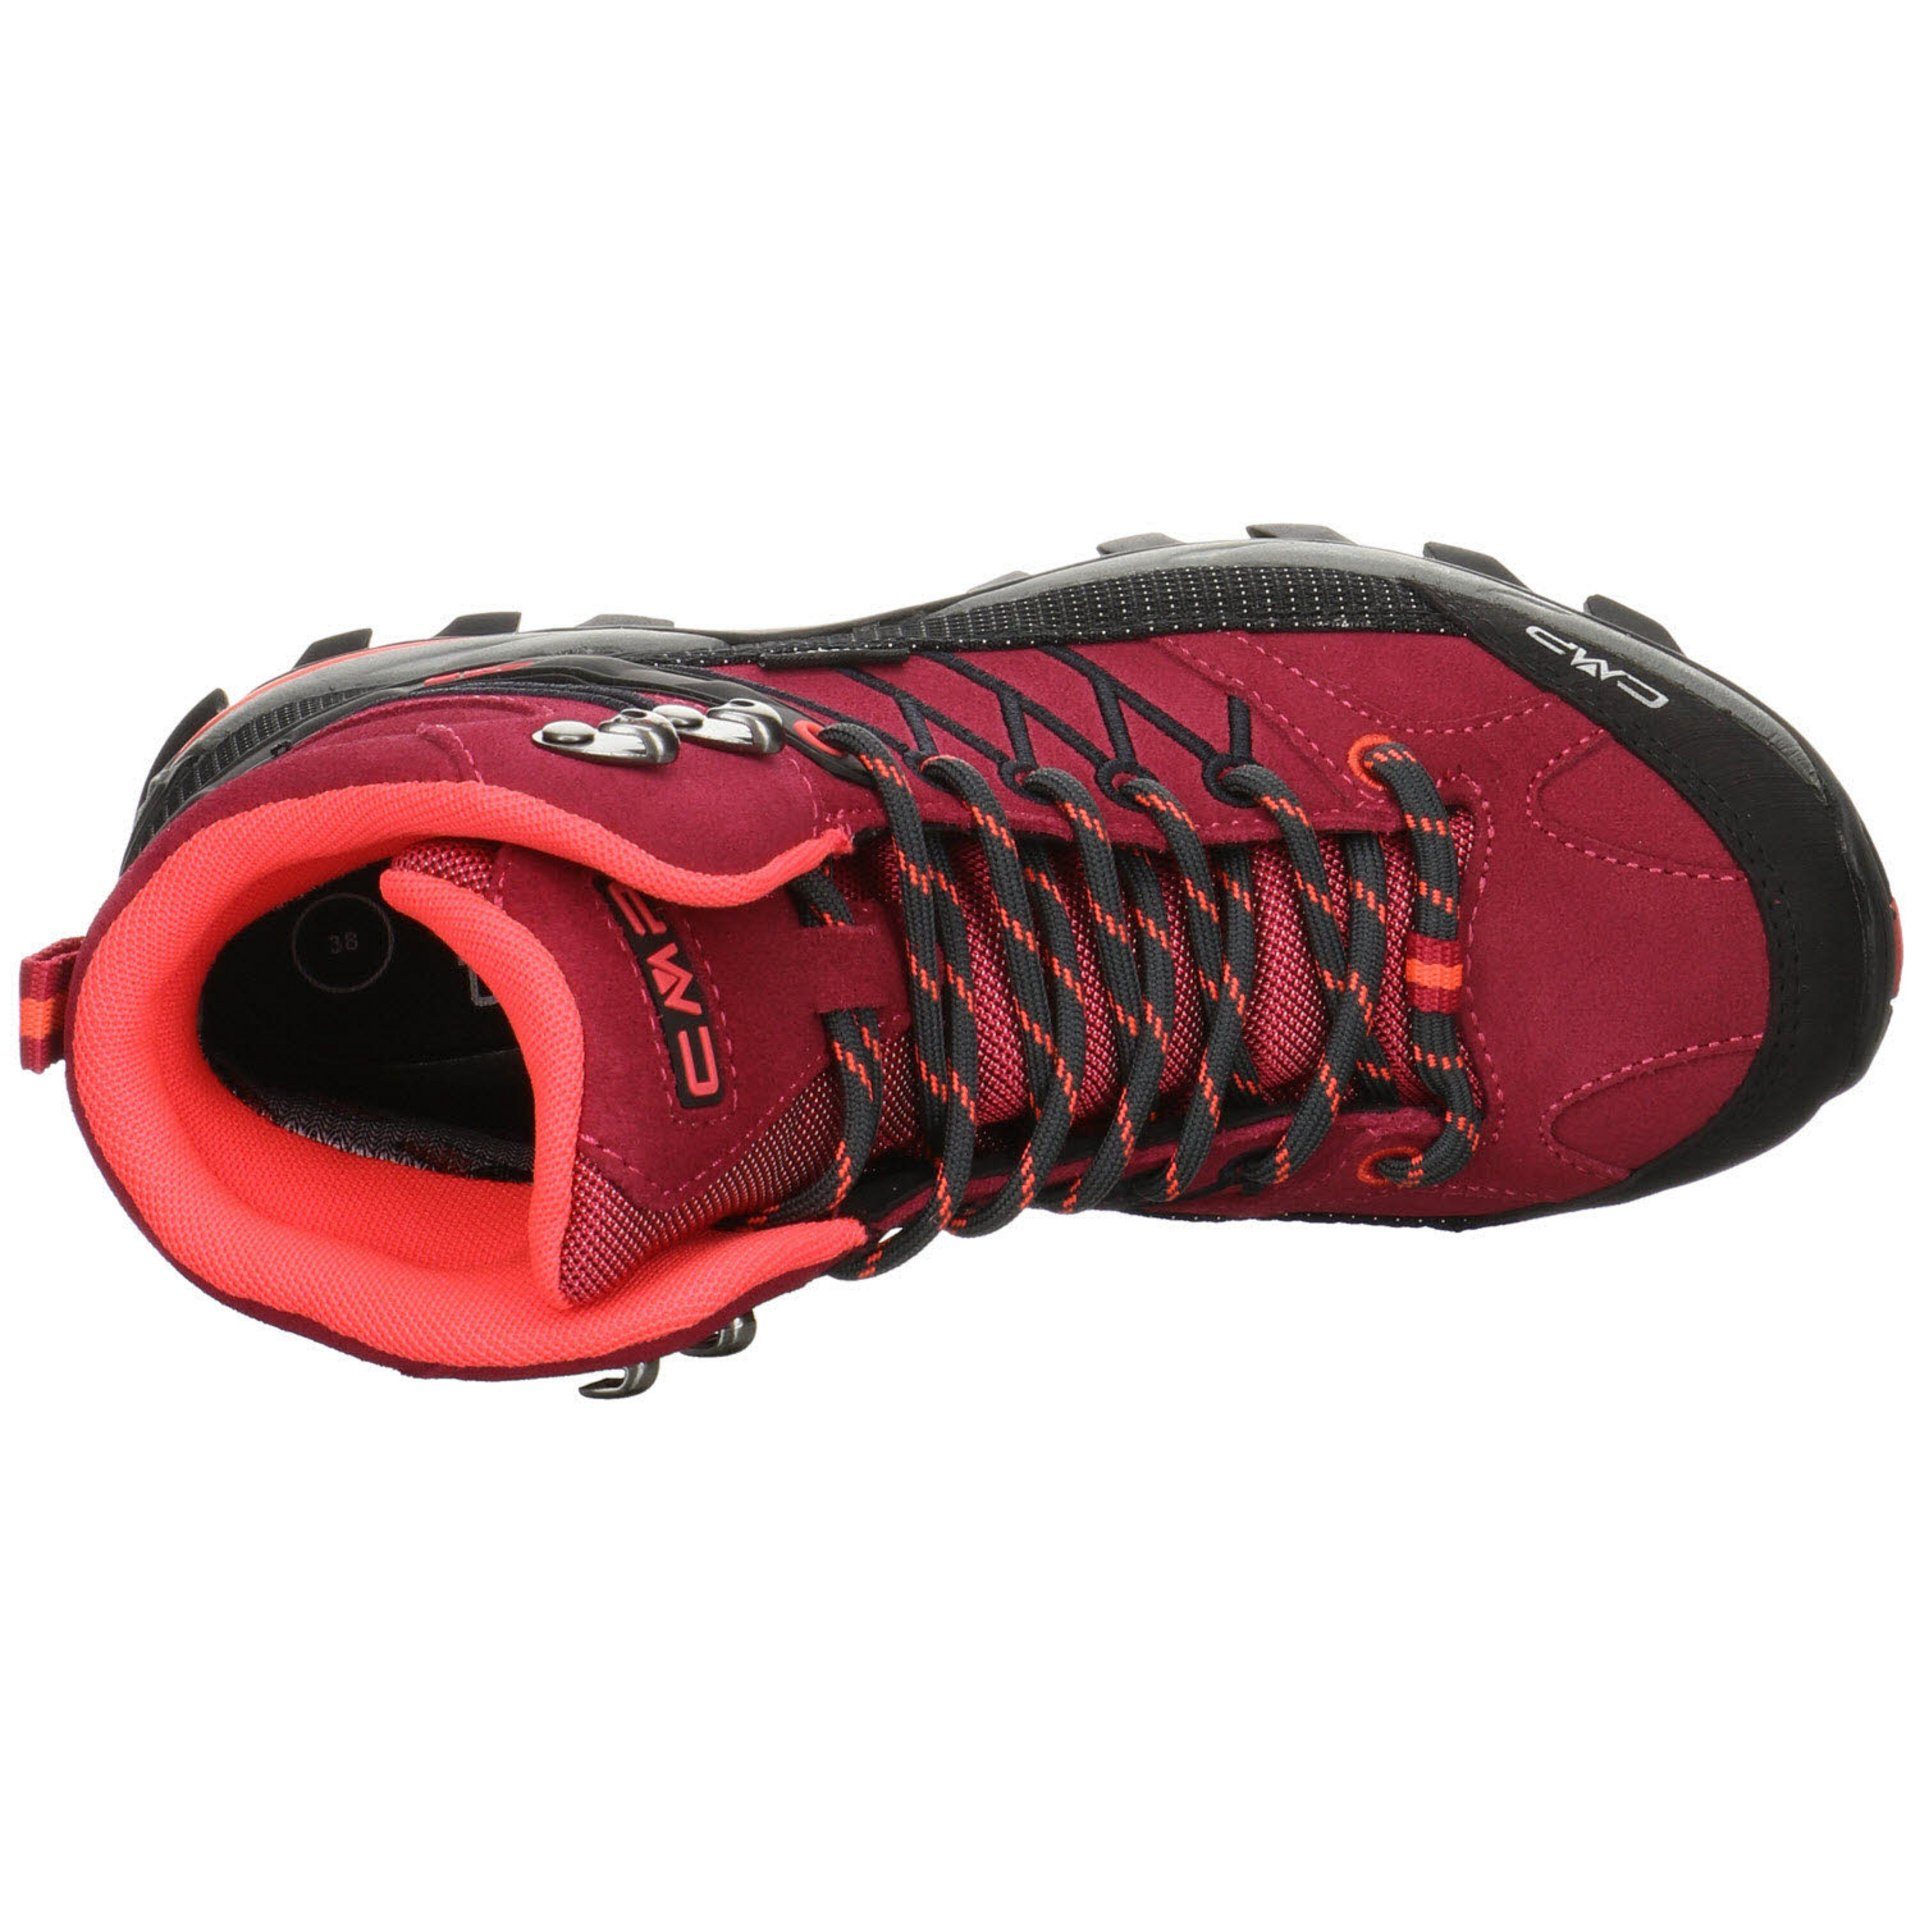 CMP Damen Outdoor MAGENTA-ANTRACITE Leder-/Textilkombination Outdoorschuh Rigel Mid Outdoorschuh Schuhe